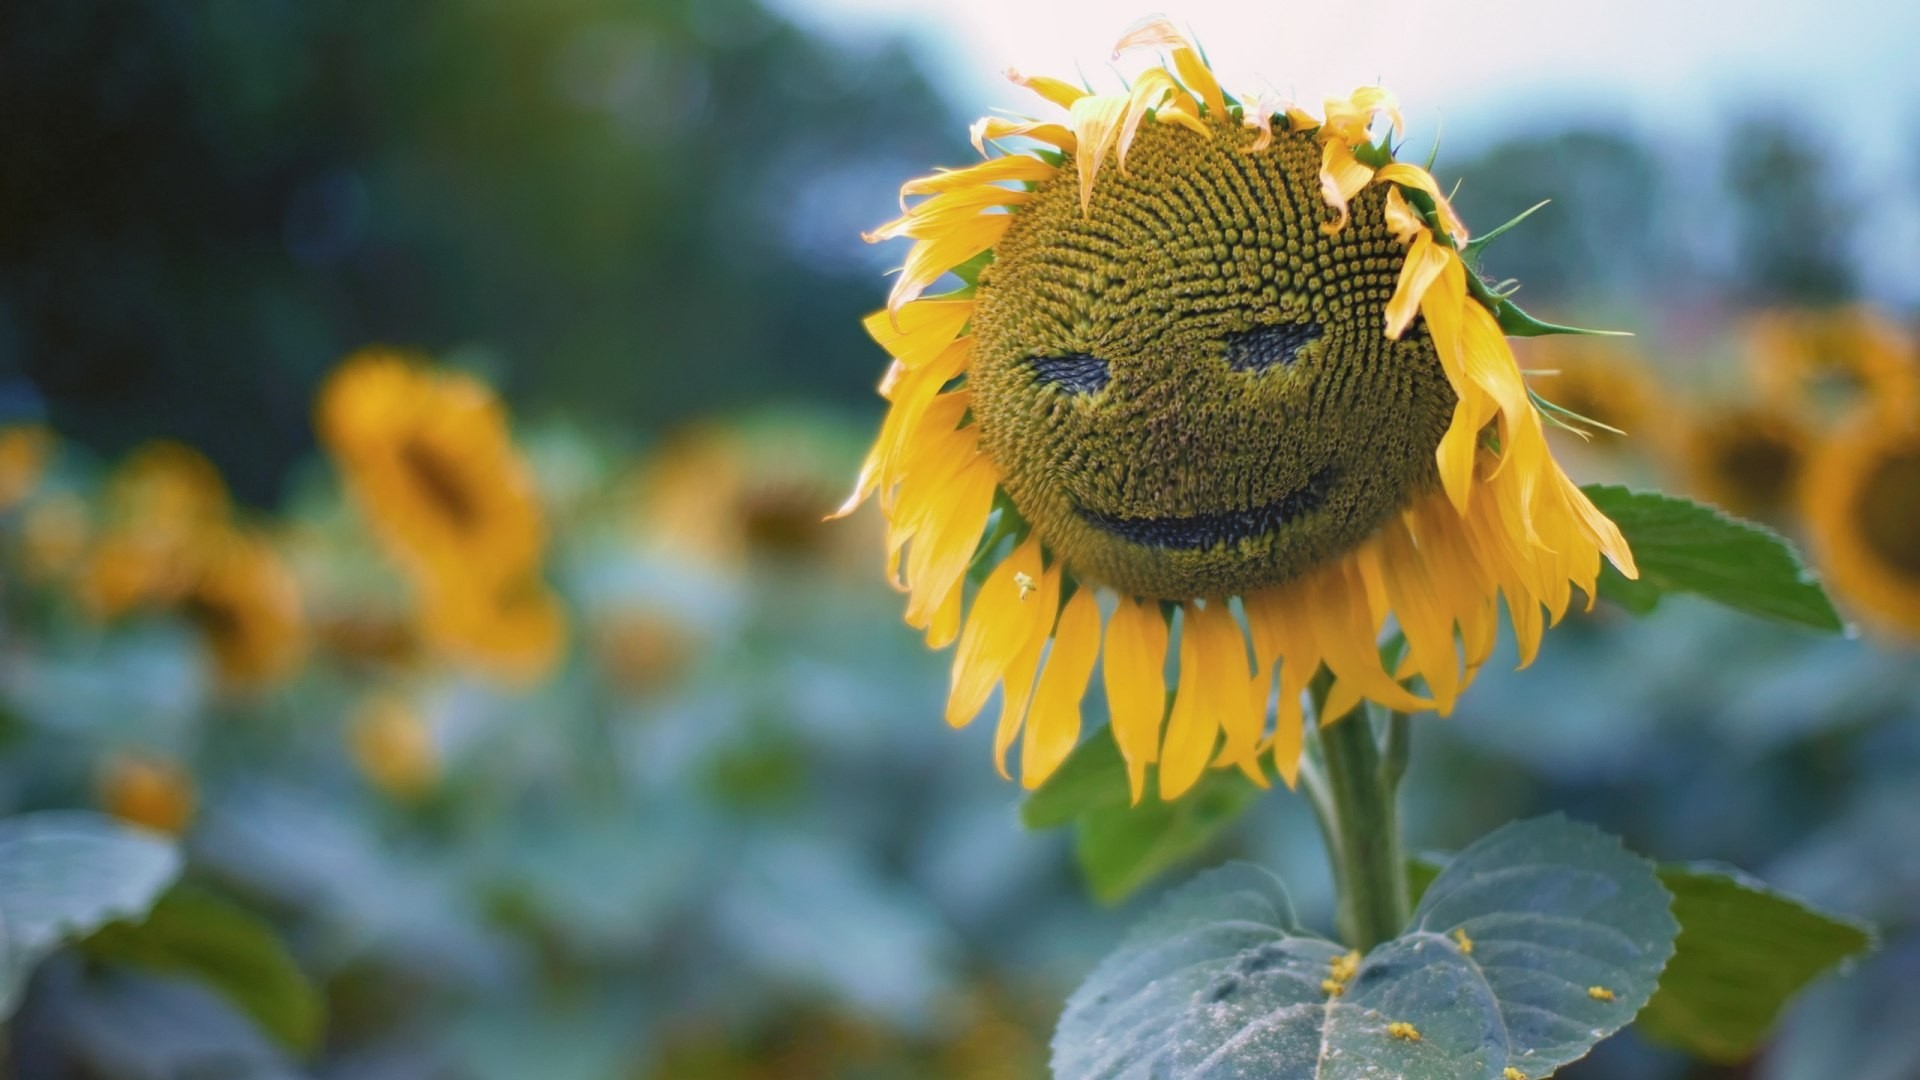 Wallpapers sunflower smiling flowers on the desktop